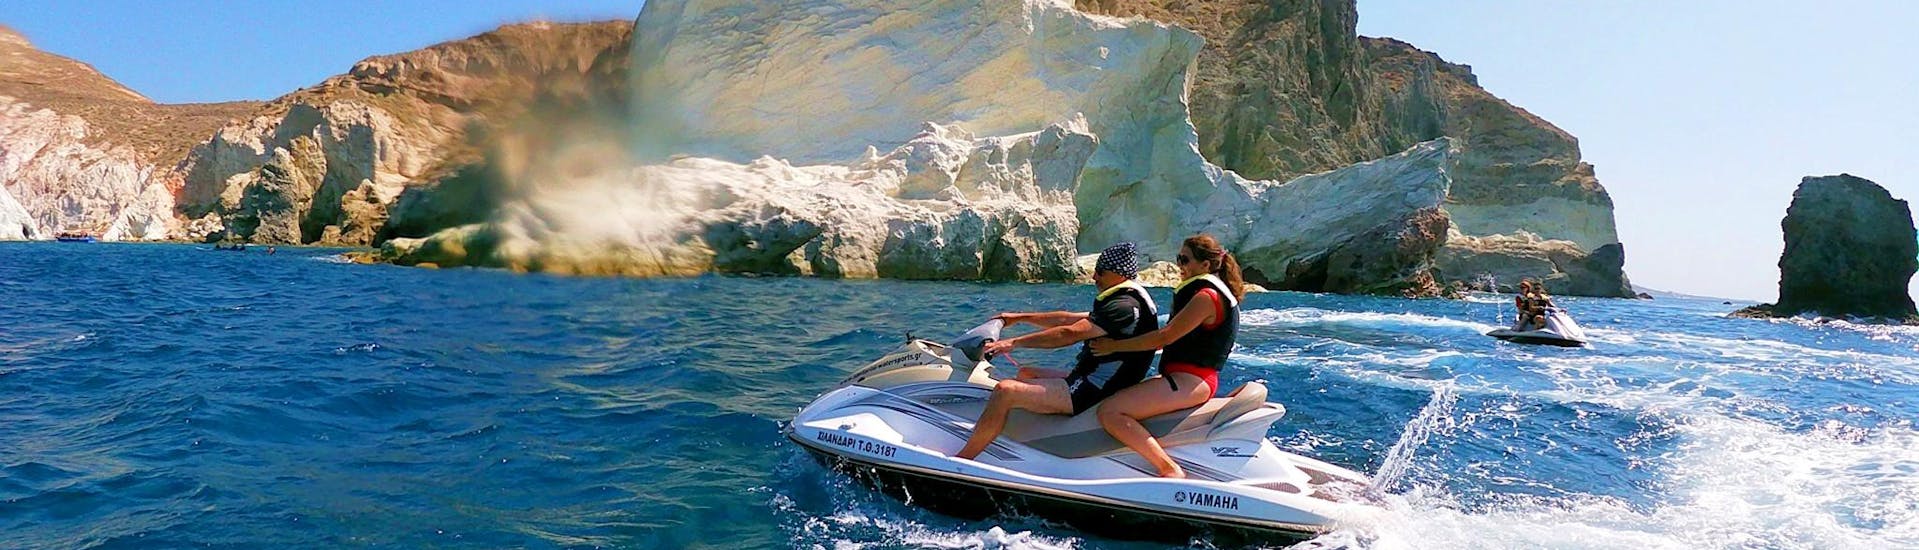 A couple is enjoying the ride across the waves during their Jet Ski Safari along the South Coast of Santorini with Kamari Beach Watersports Santorini.